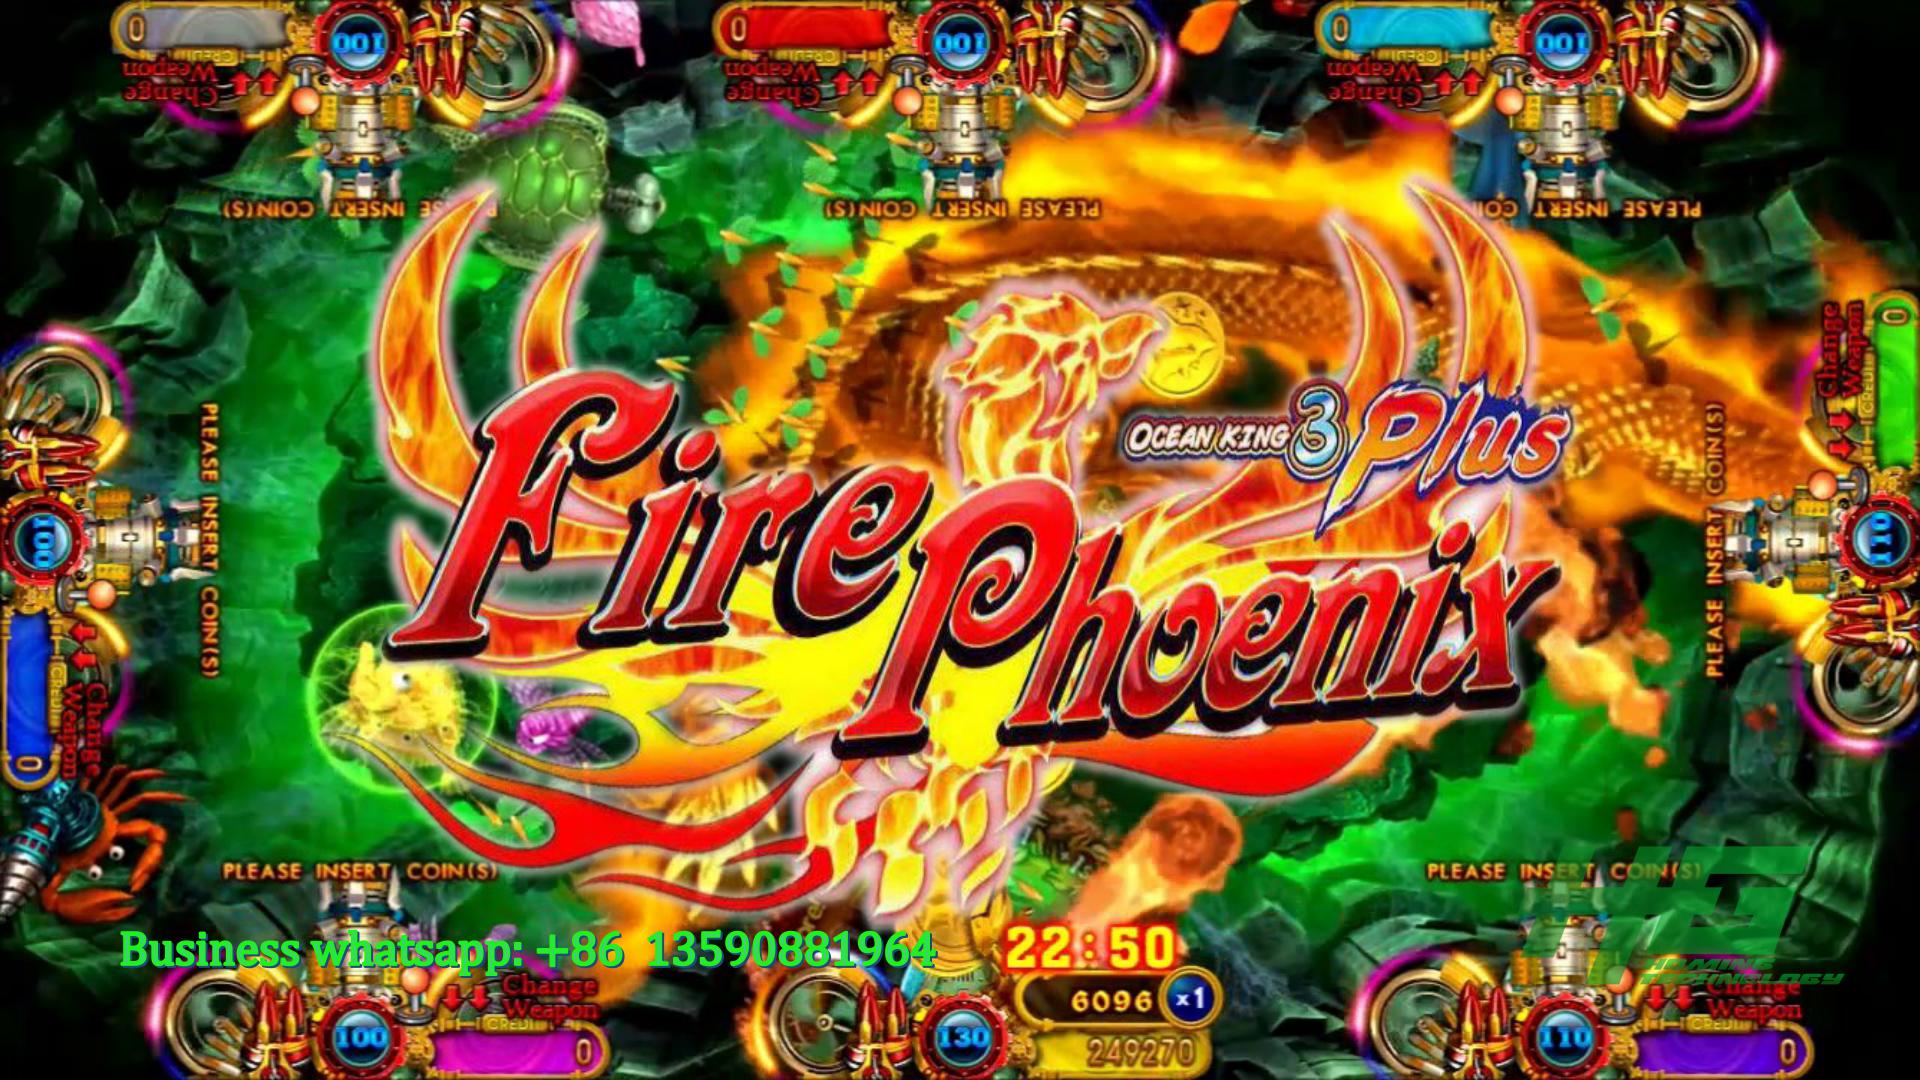 IGS Original Ocean King 3 Plus Fire Phoenix,Fire Phoenix Fish Table Game Machine For Sale